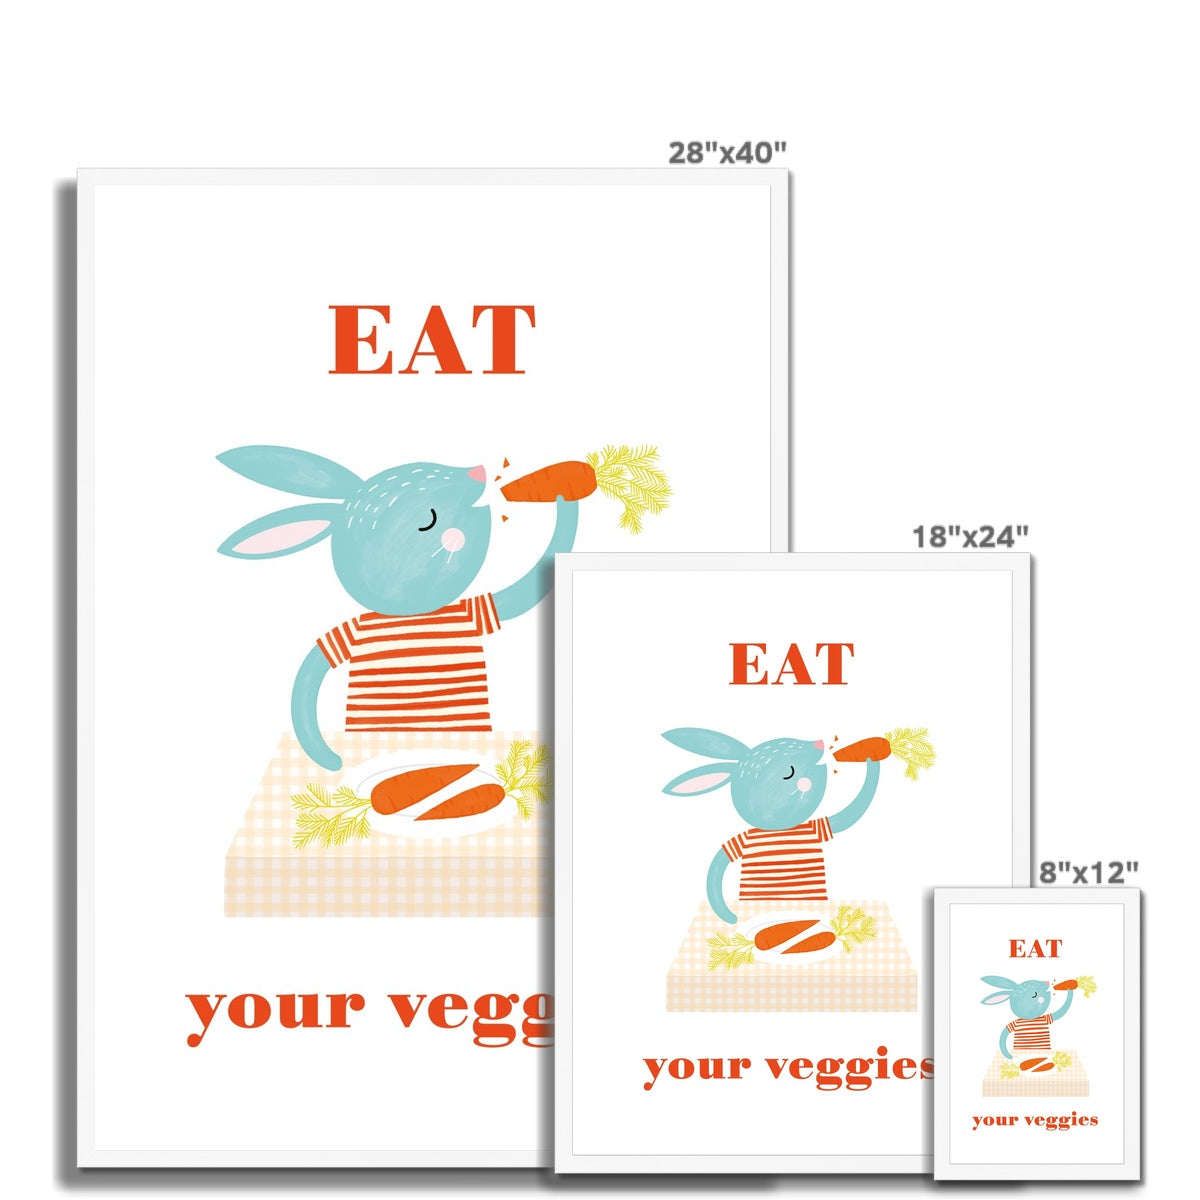 Eat Your Veggies Framed Fine Art Print | Nora Aoyagi